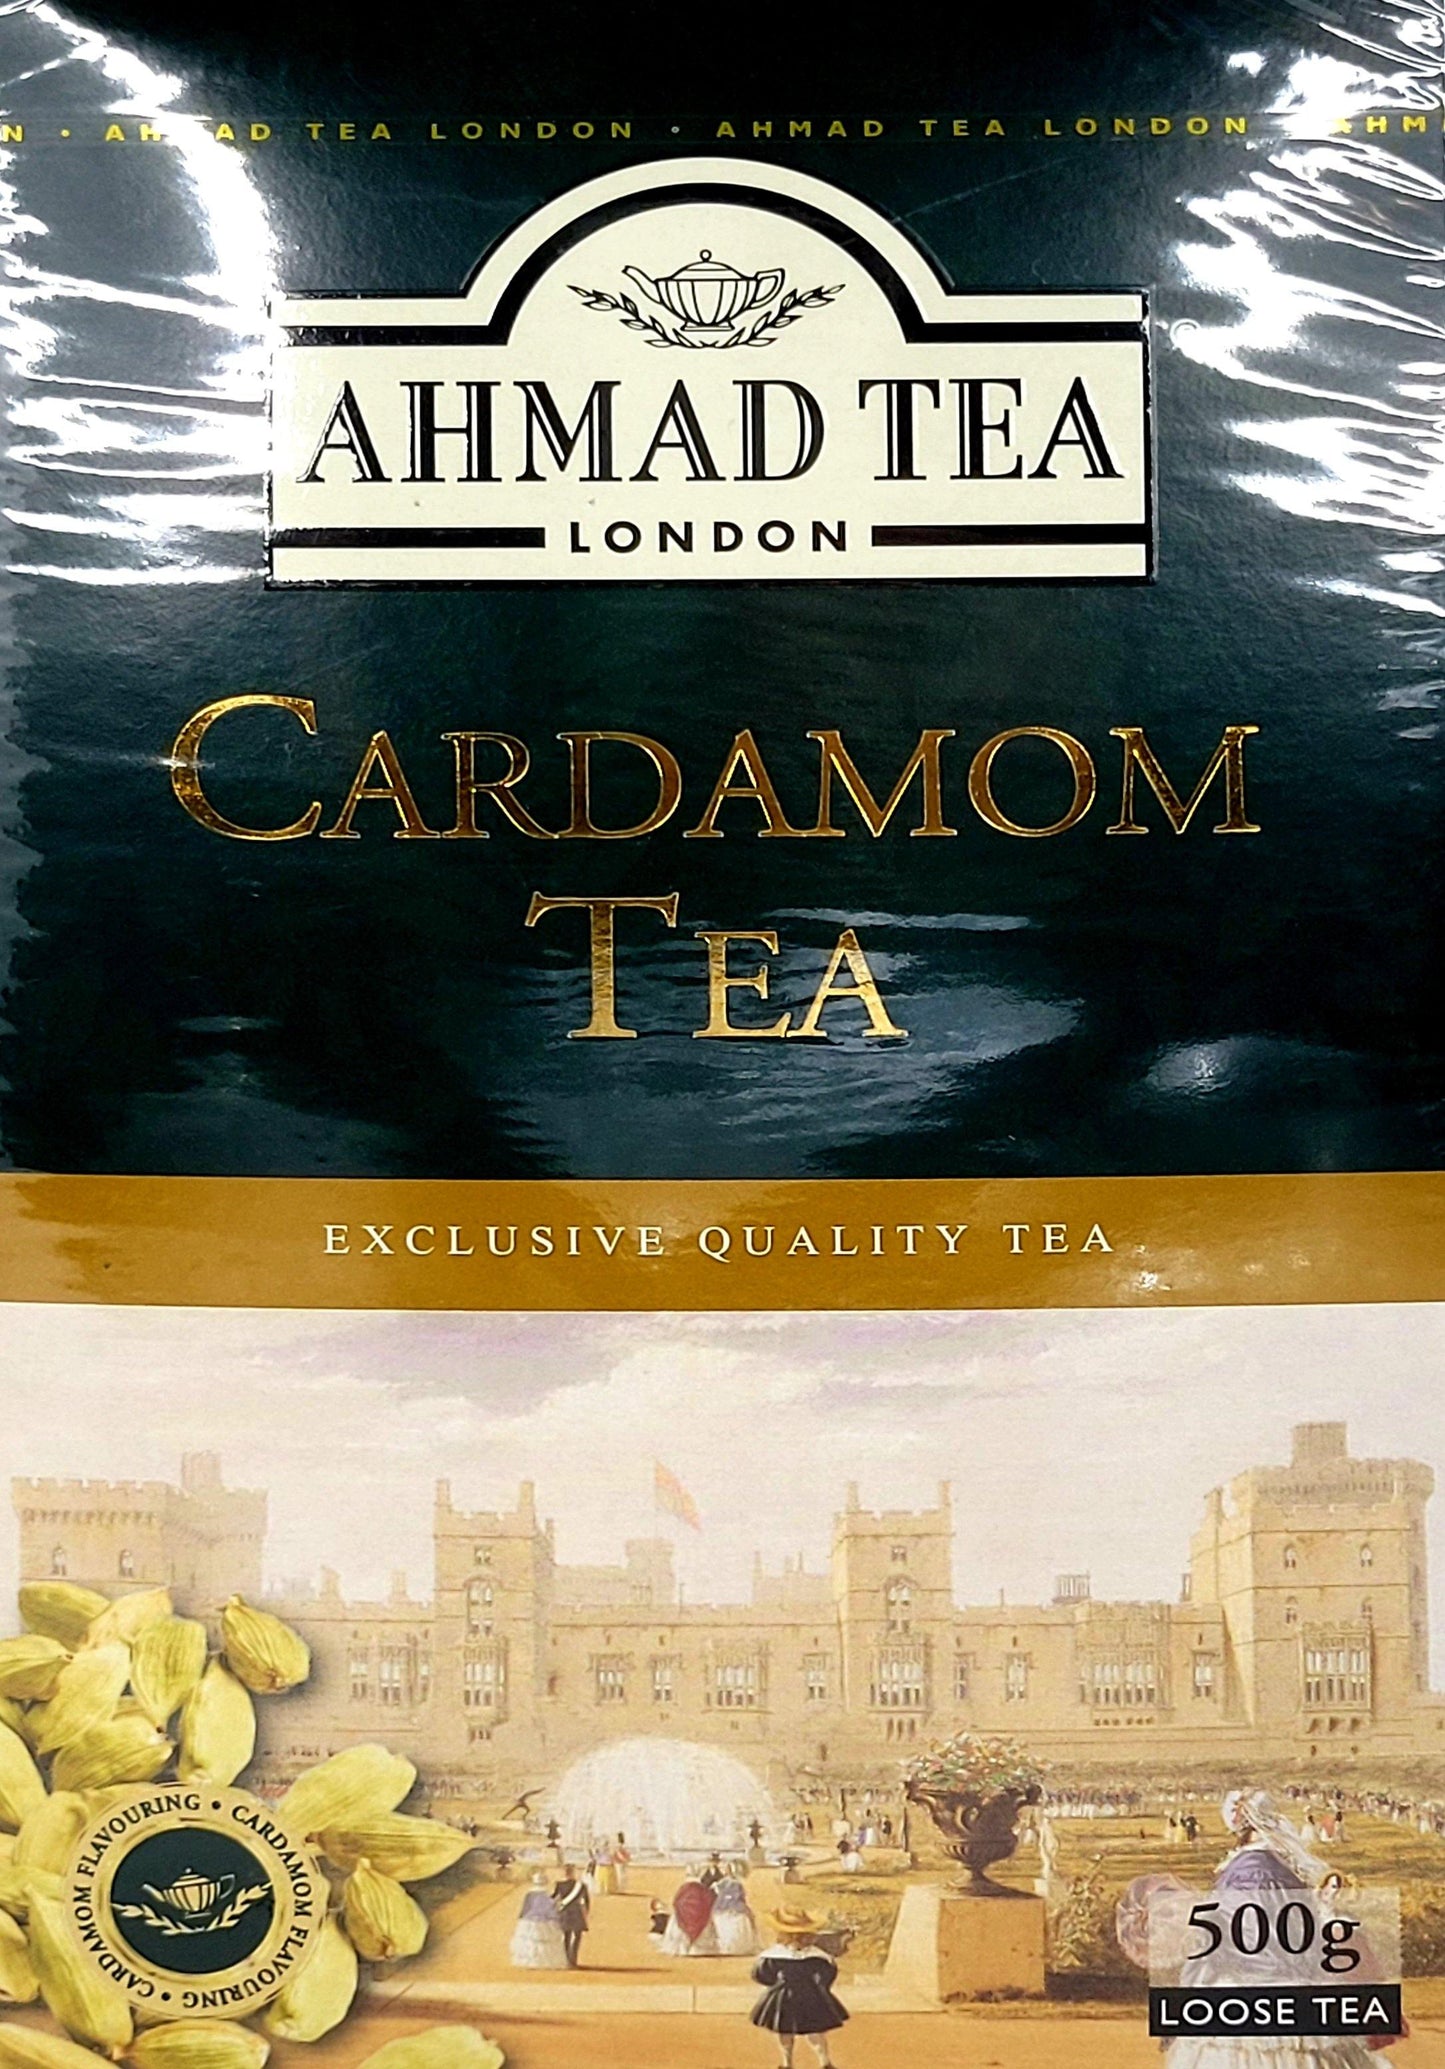 Ahmad Tea Cardamomma - Arabian Shopping Zone